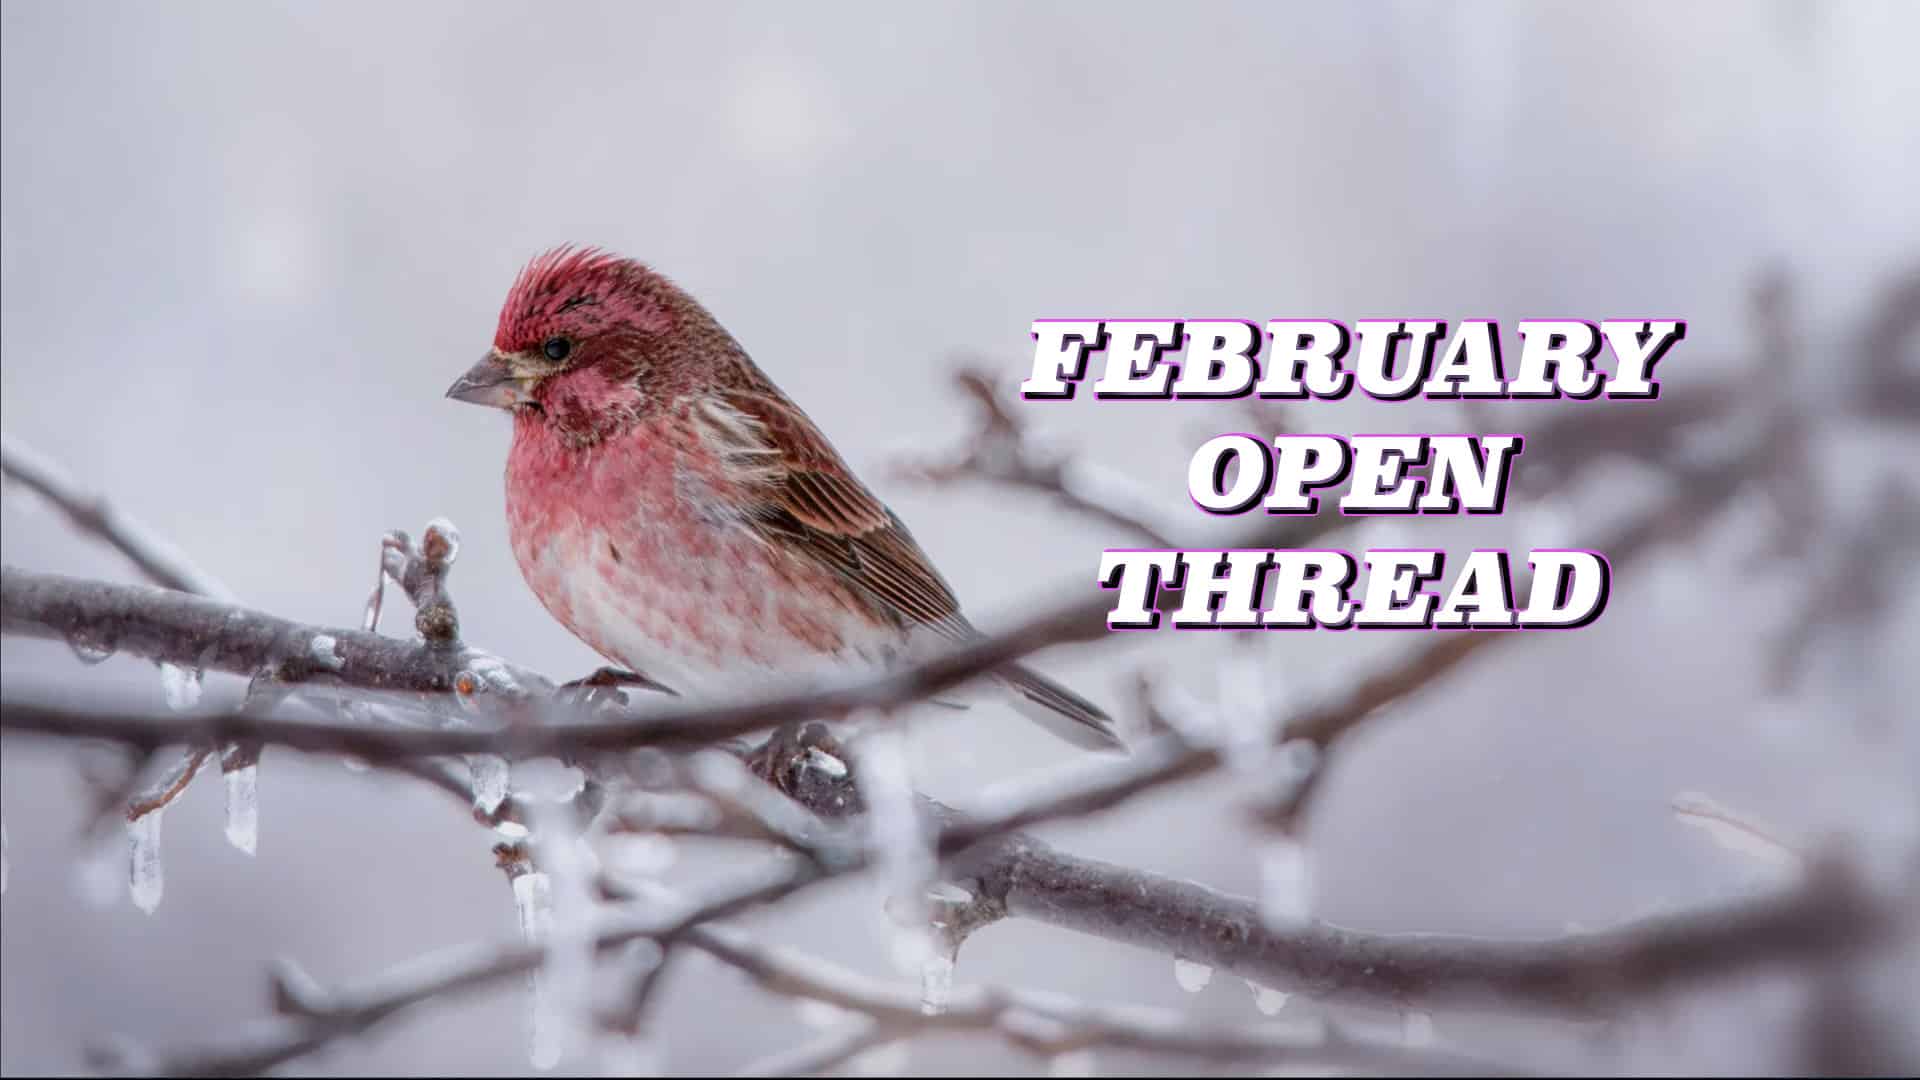 February Open Thread